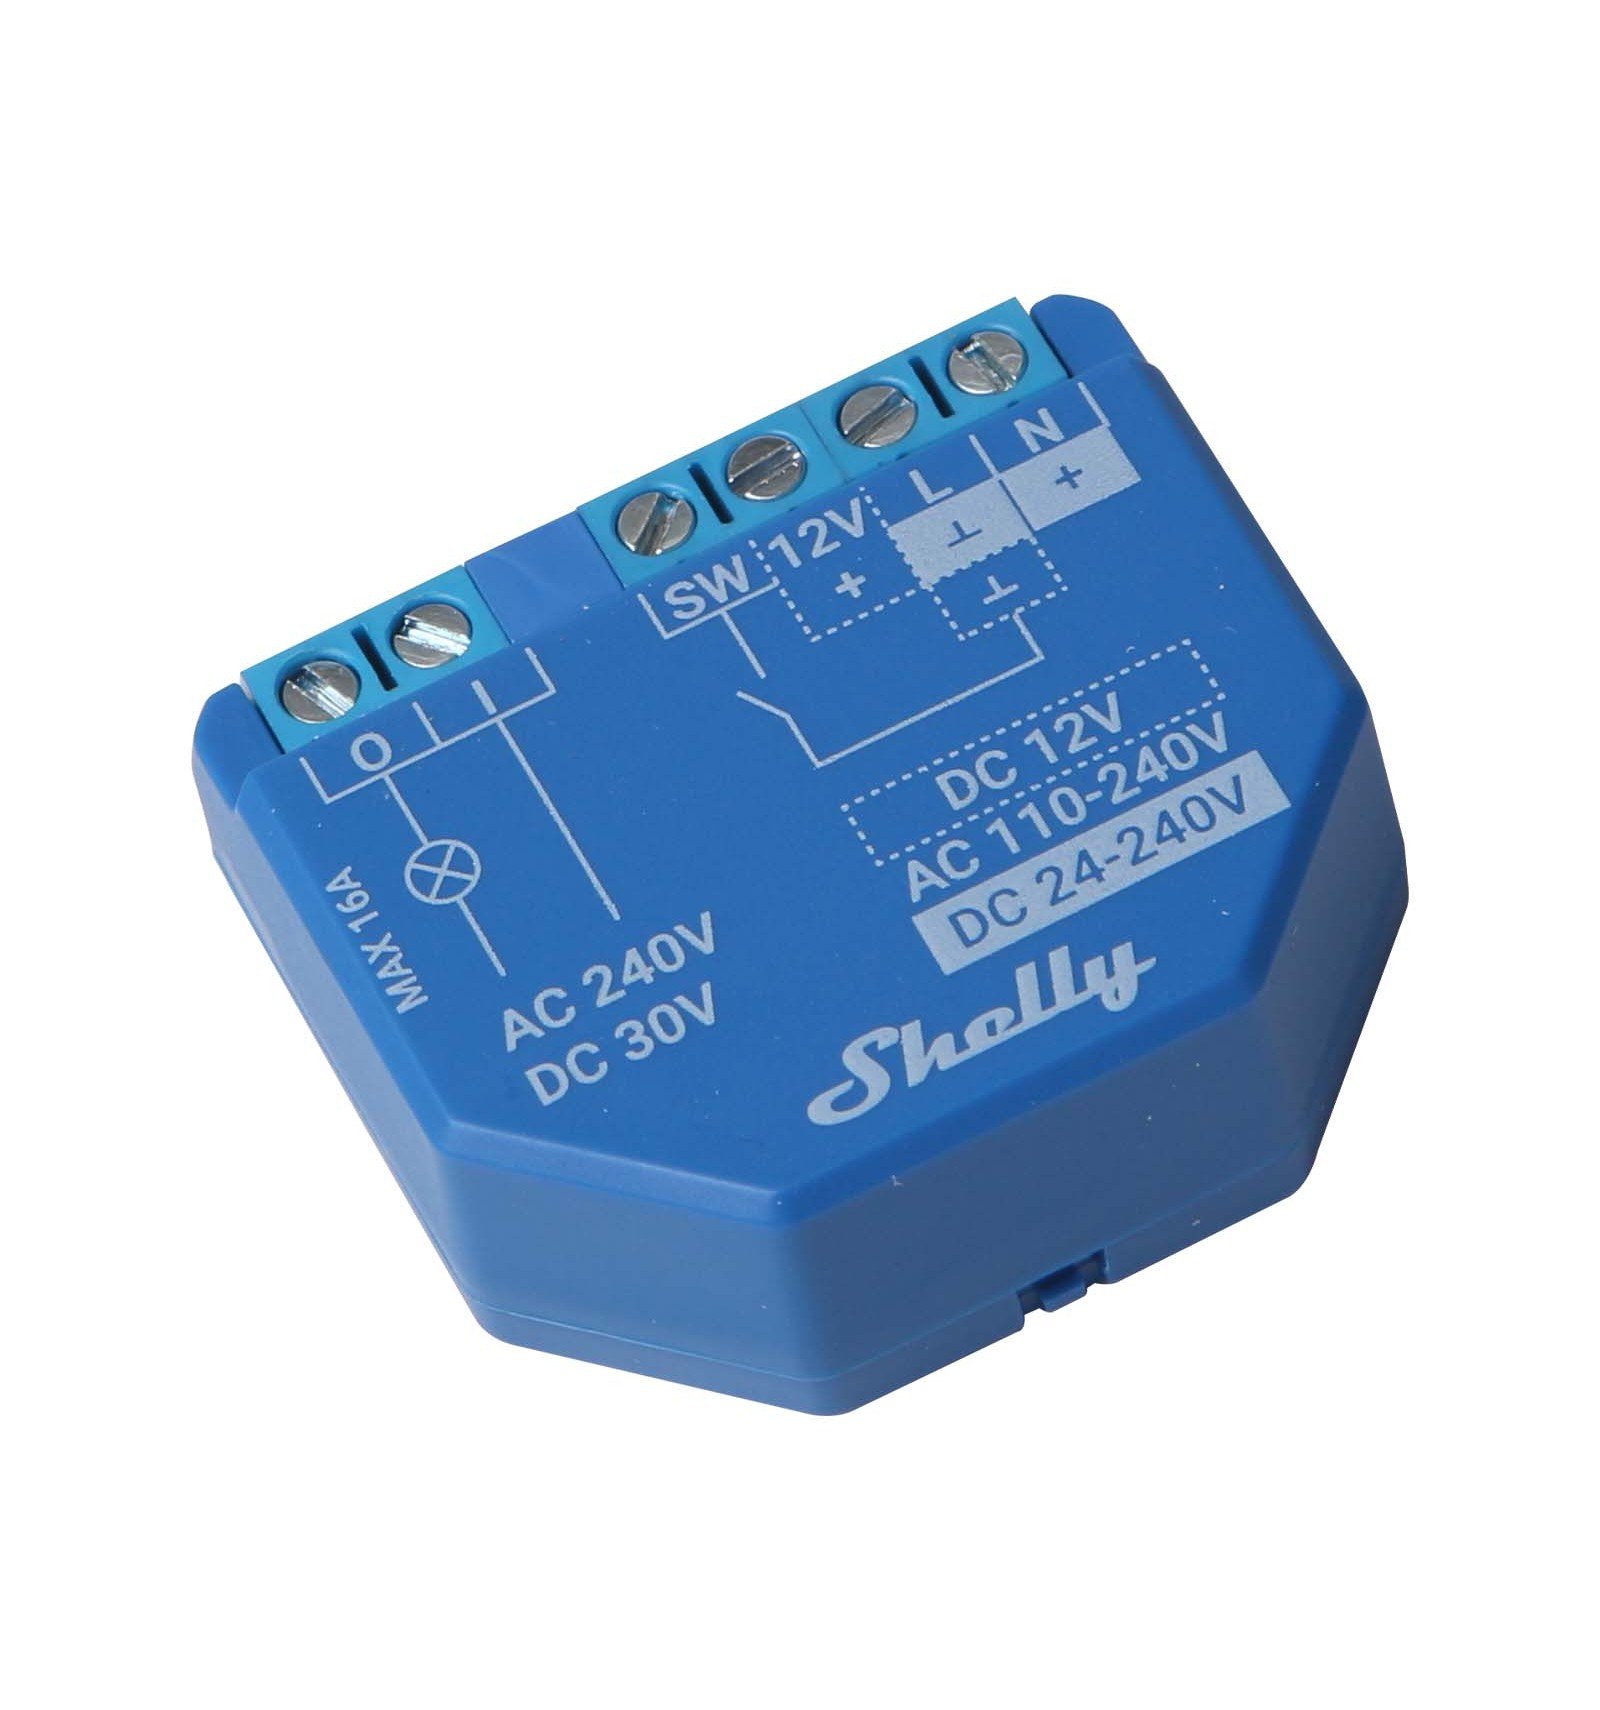 Shelly Plus 1 WiFi Relay Switch  Single Channel – DIY Electronics